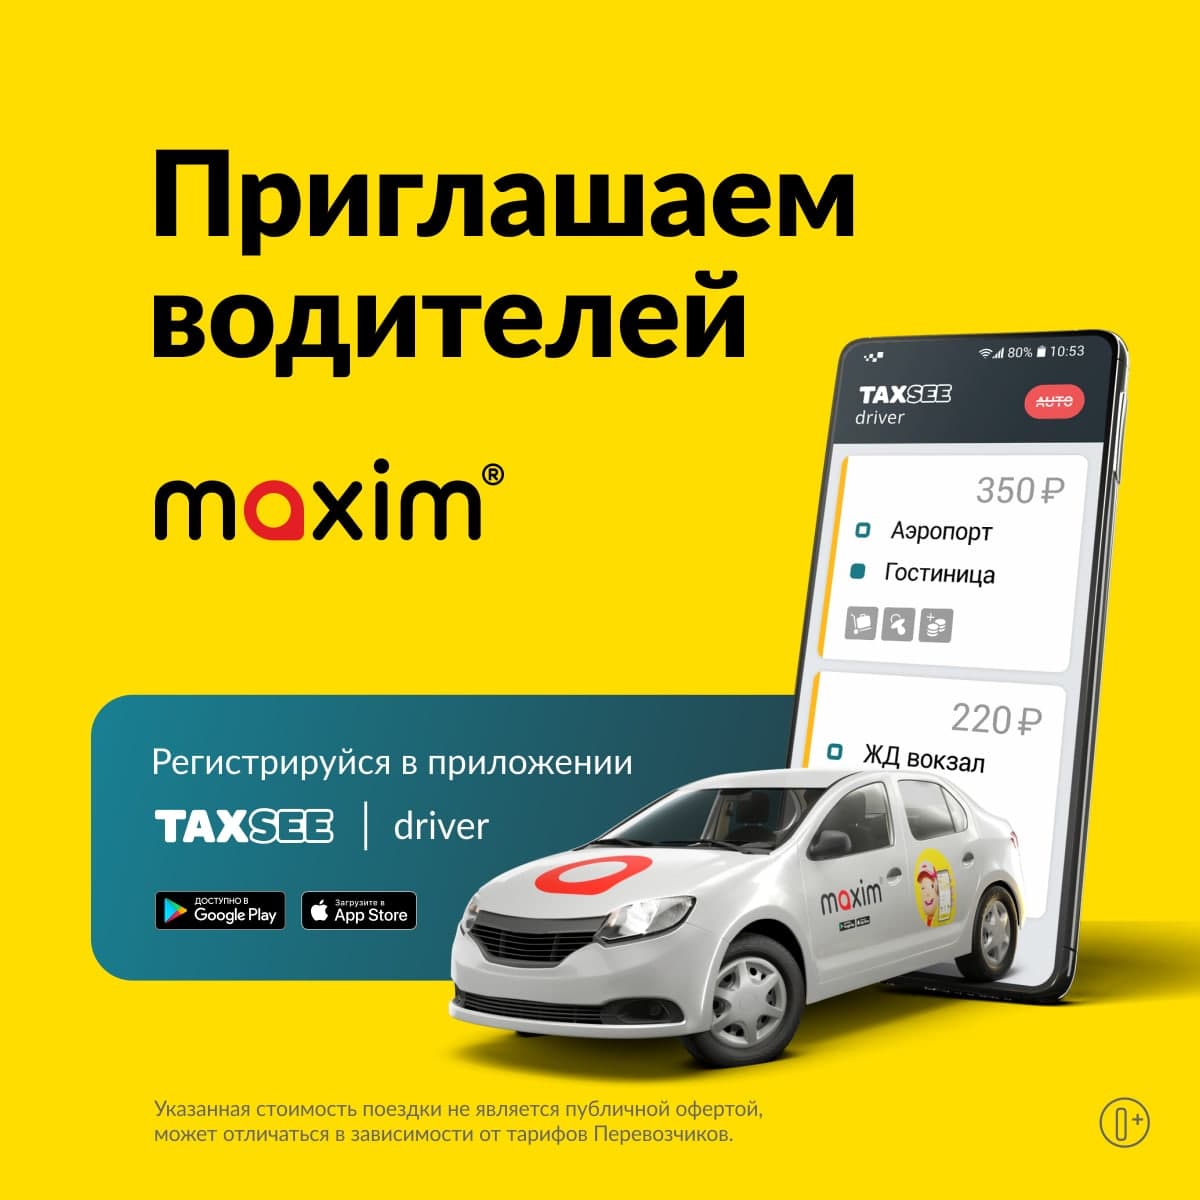 Сервис заказа такси Maxim